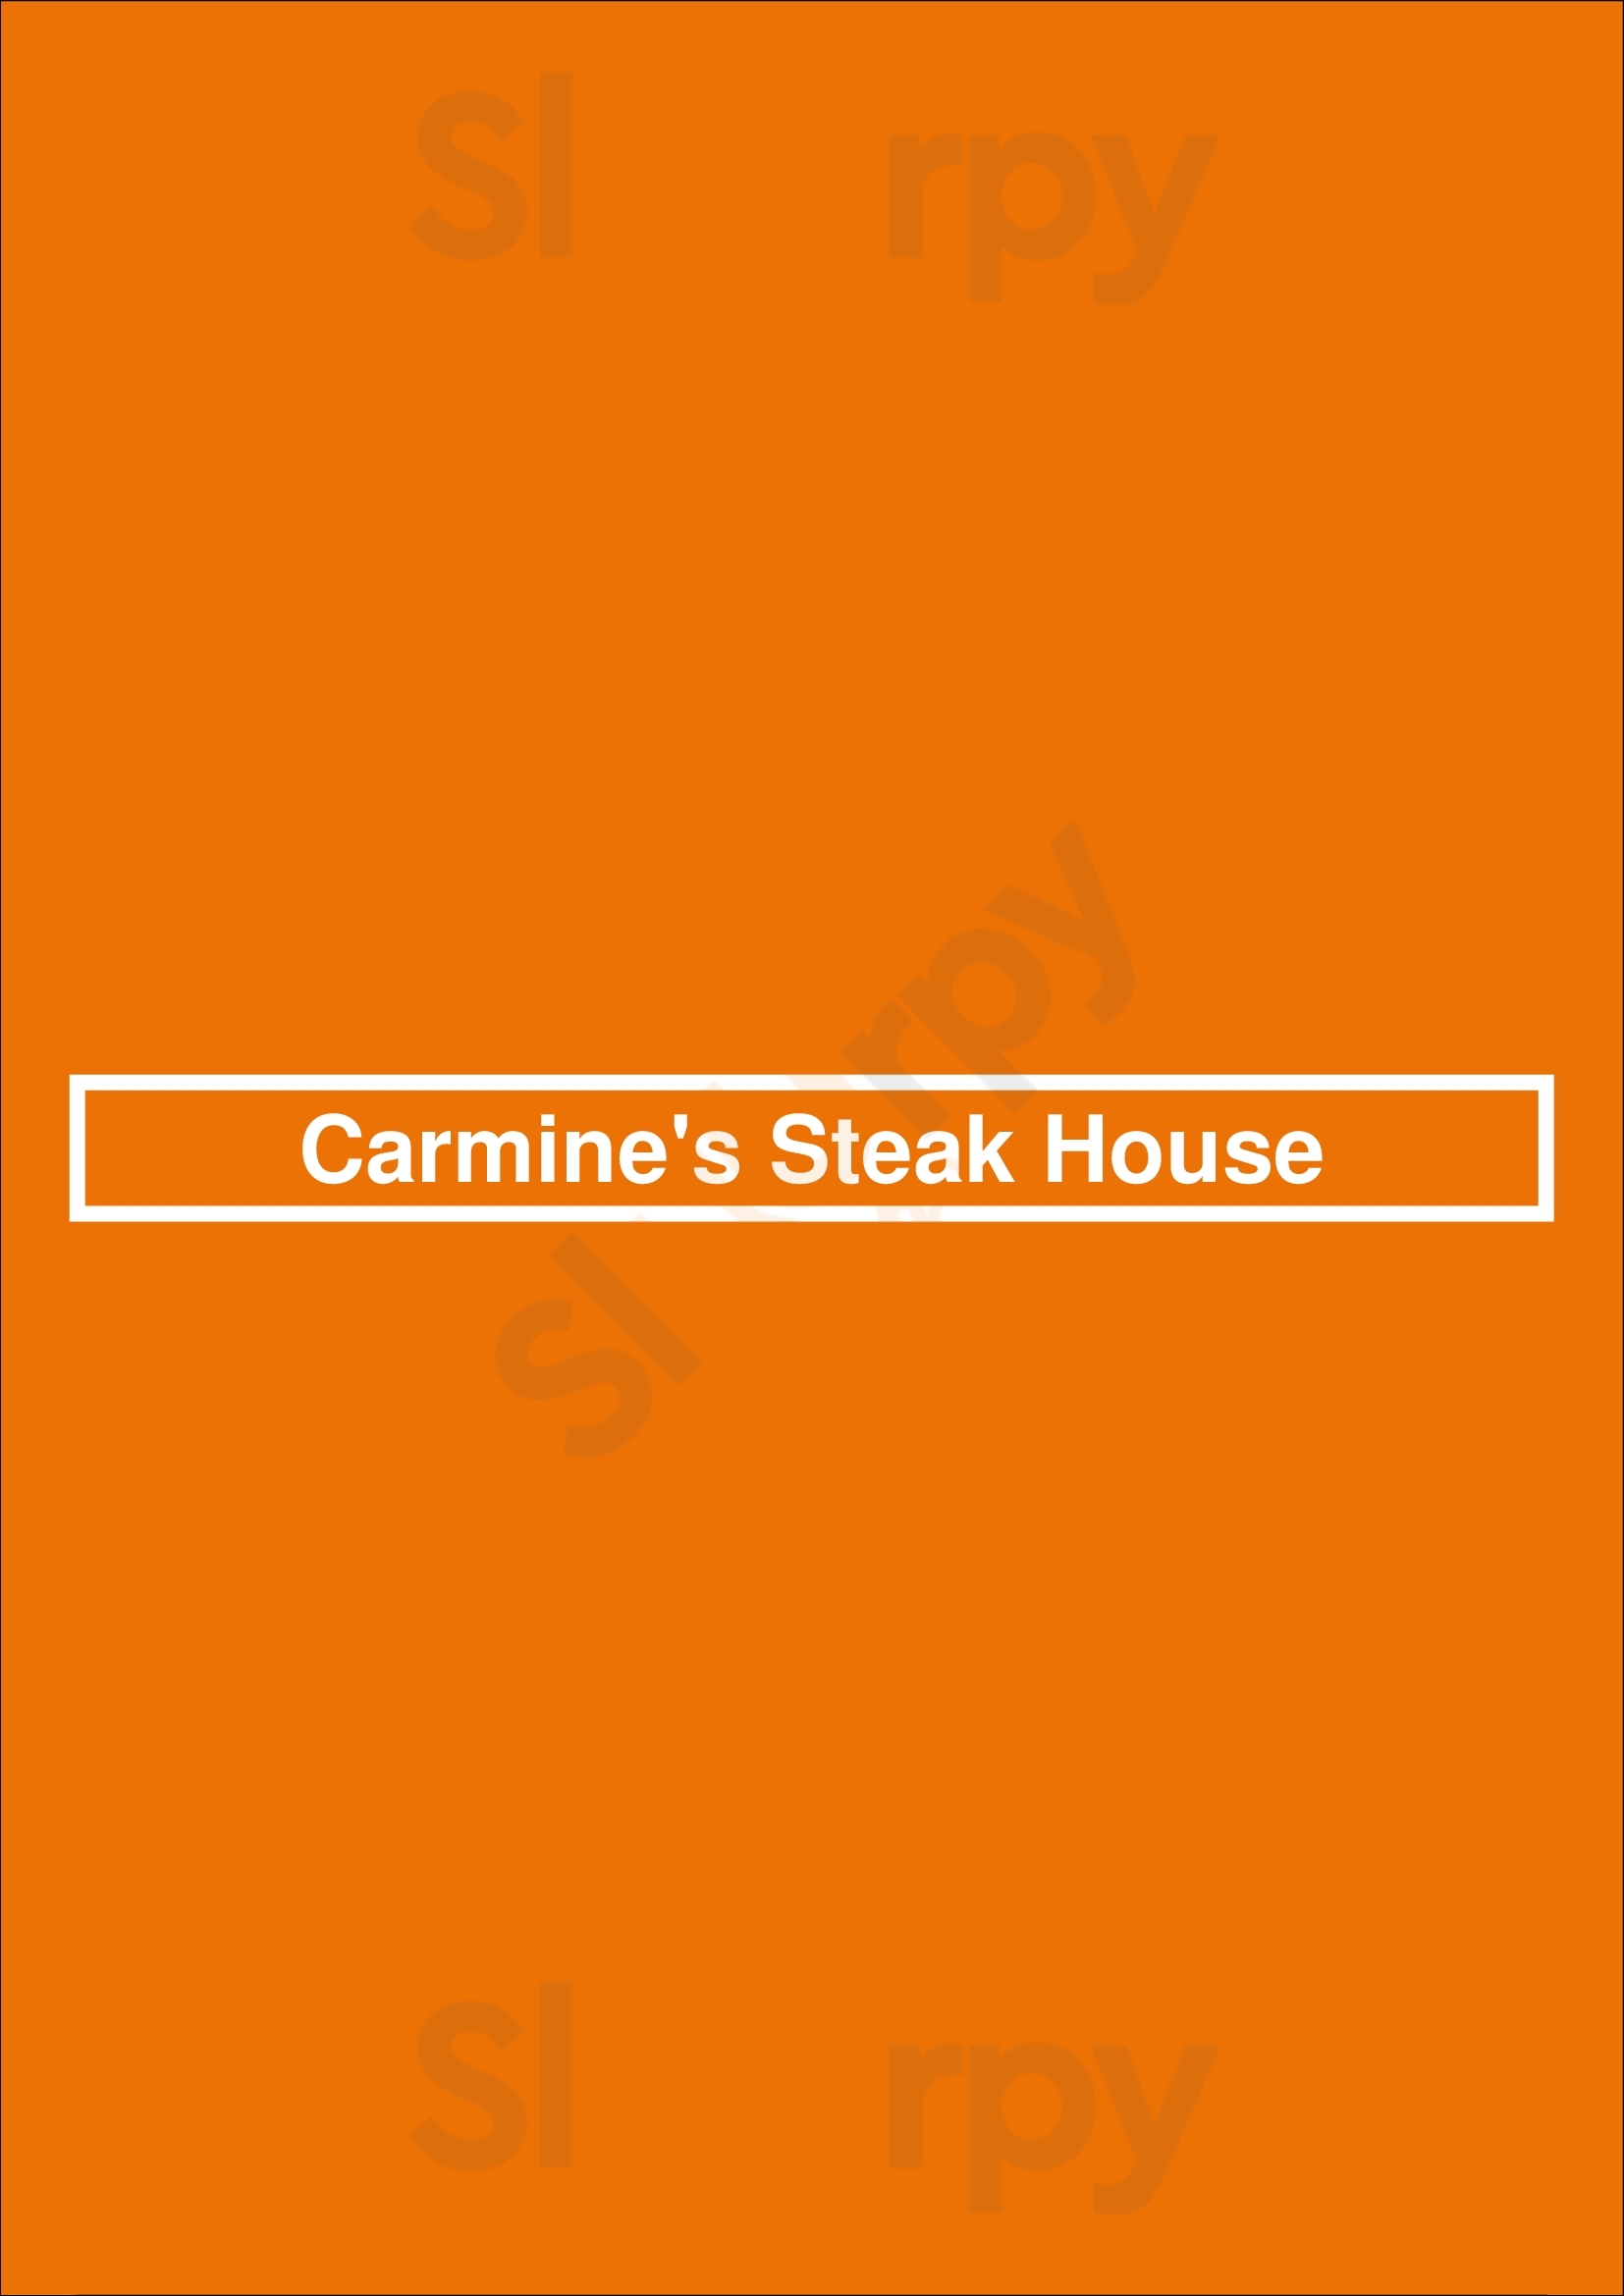 Carmine's Steak House Saint Louis Menu - 1